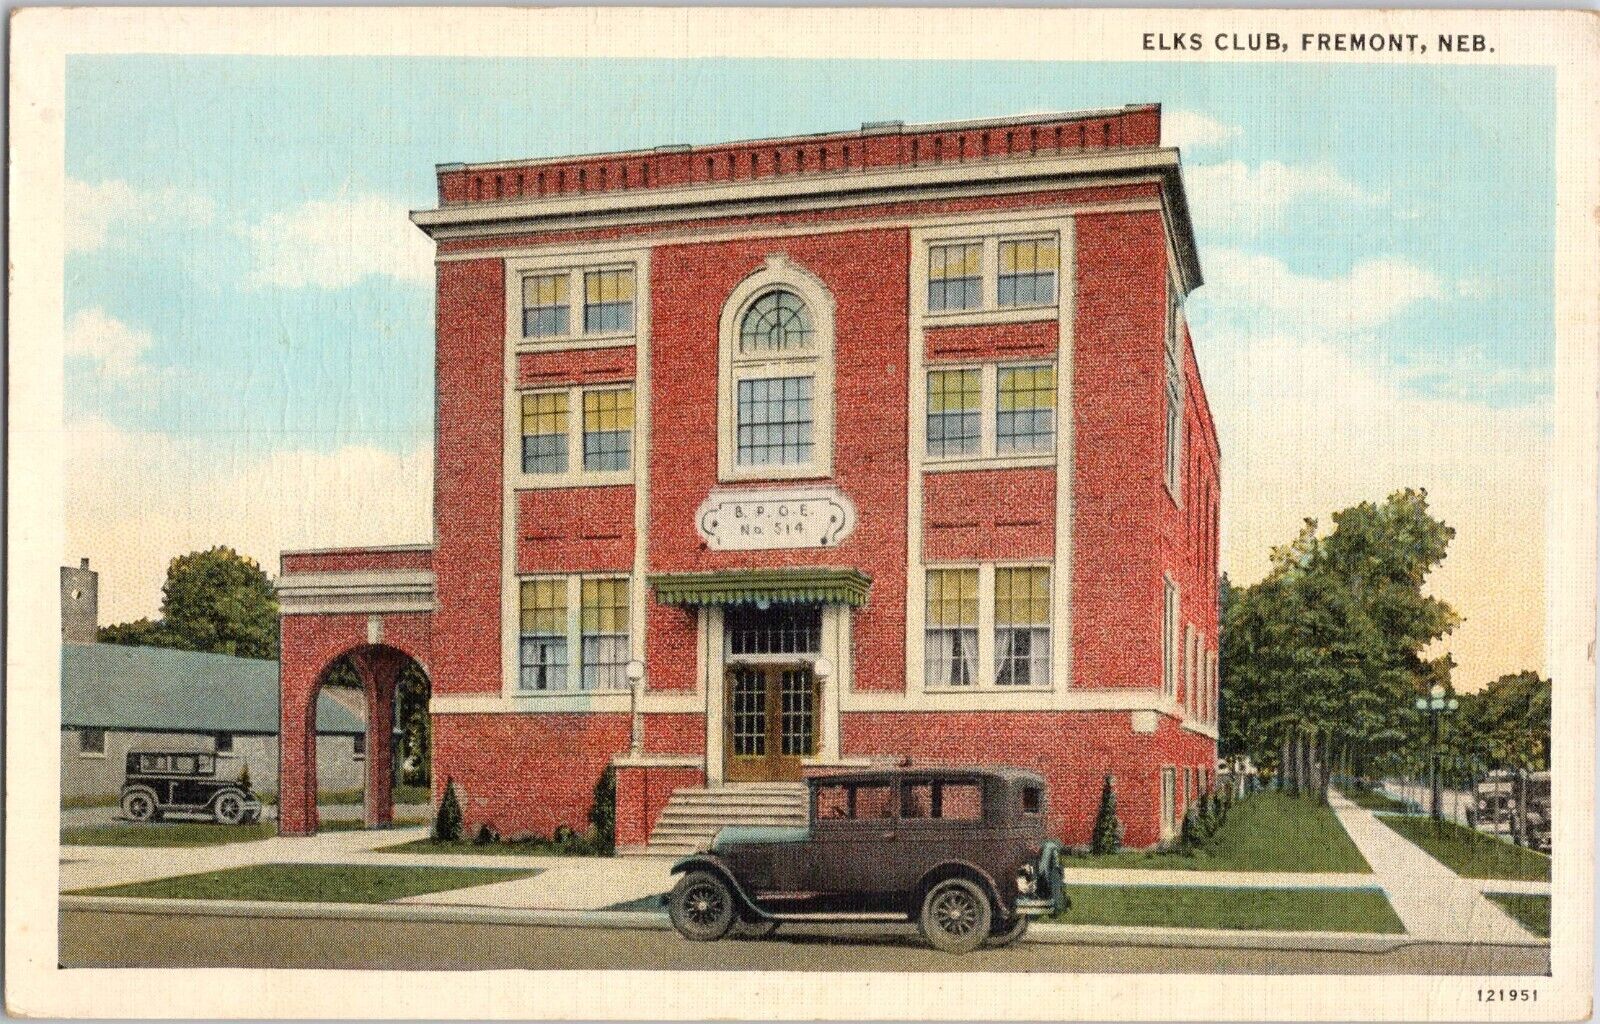 c 1920s Fremont, Nebraska Elsk Club BPOE Vintage Postcard